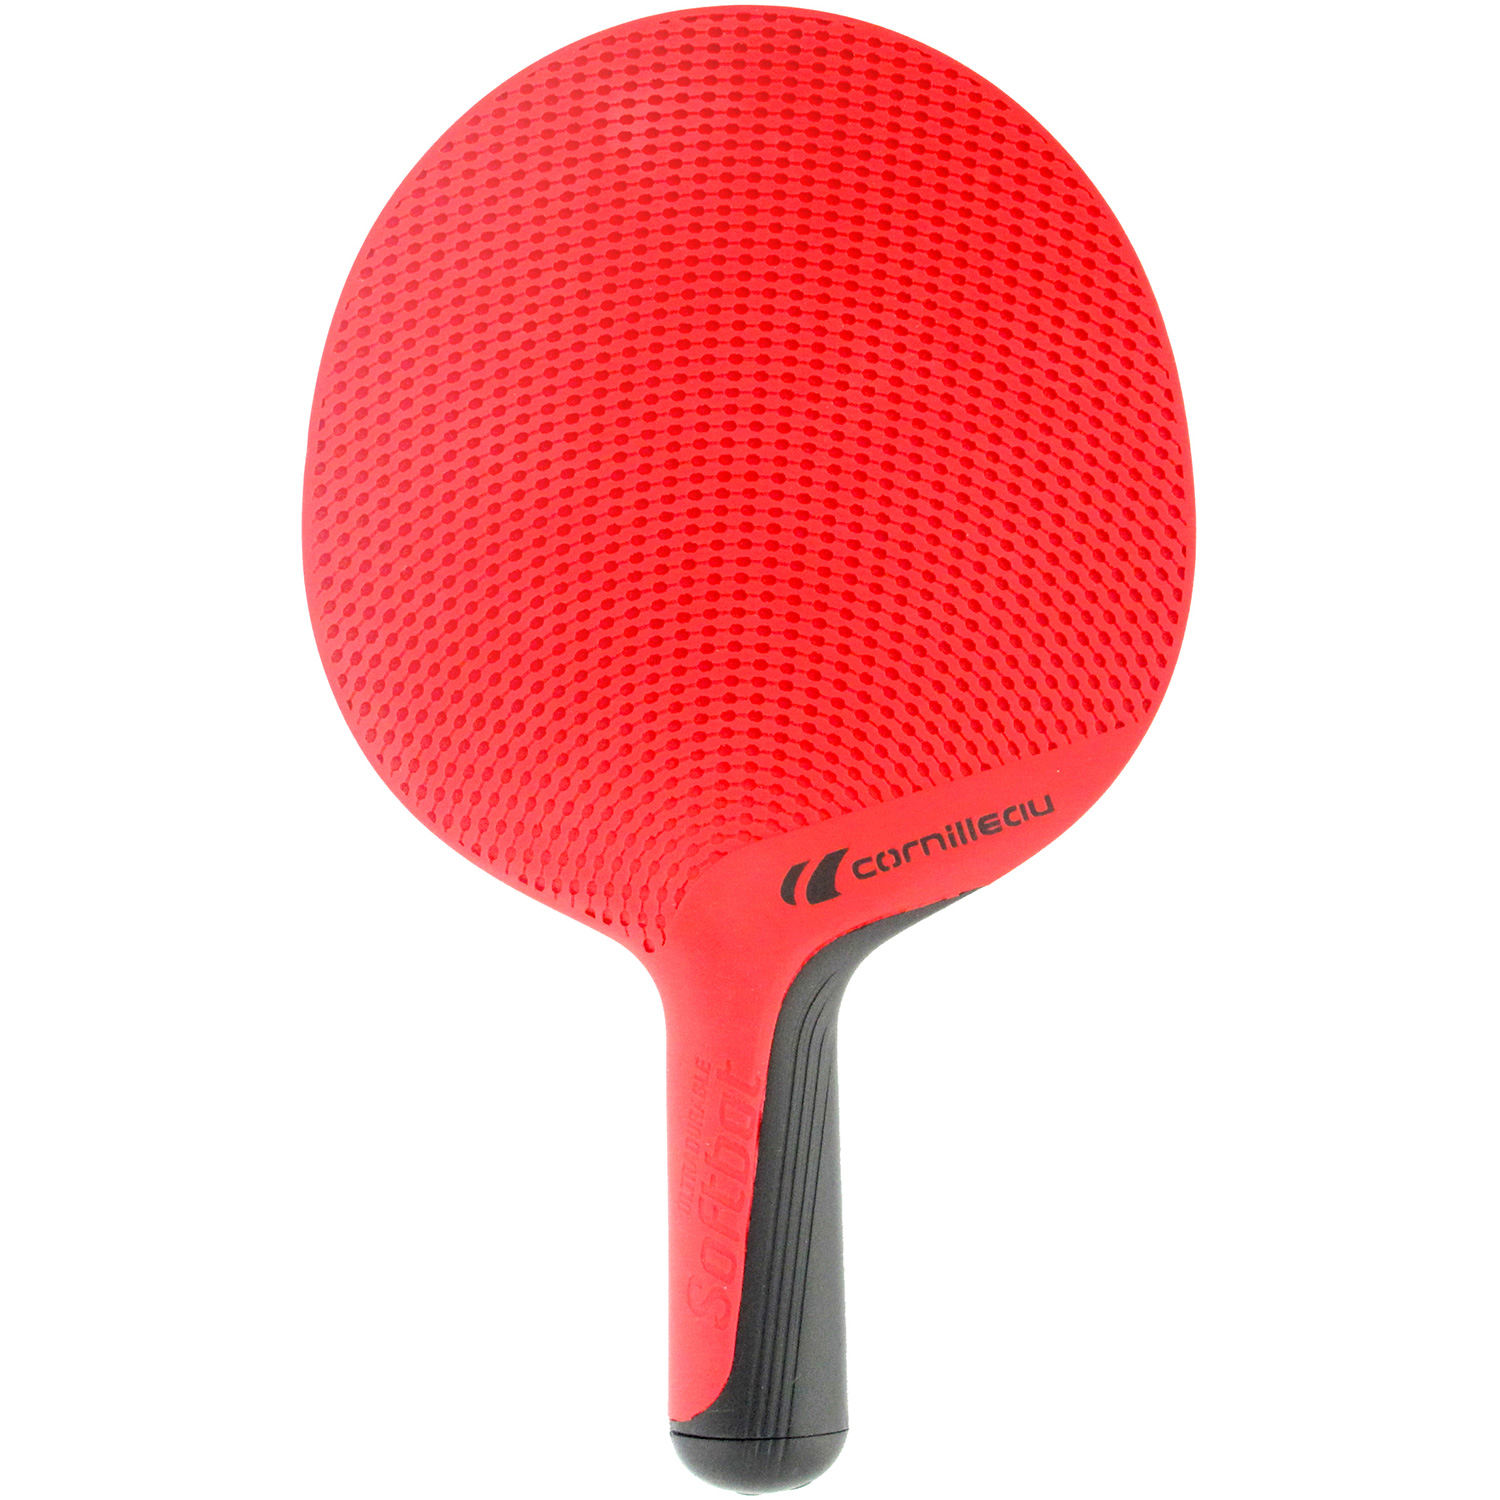 Raqueta Ping Pong Cornilleau Sotbat Tt Bat - rojo - 